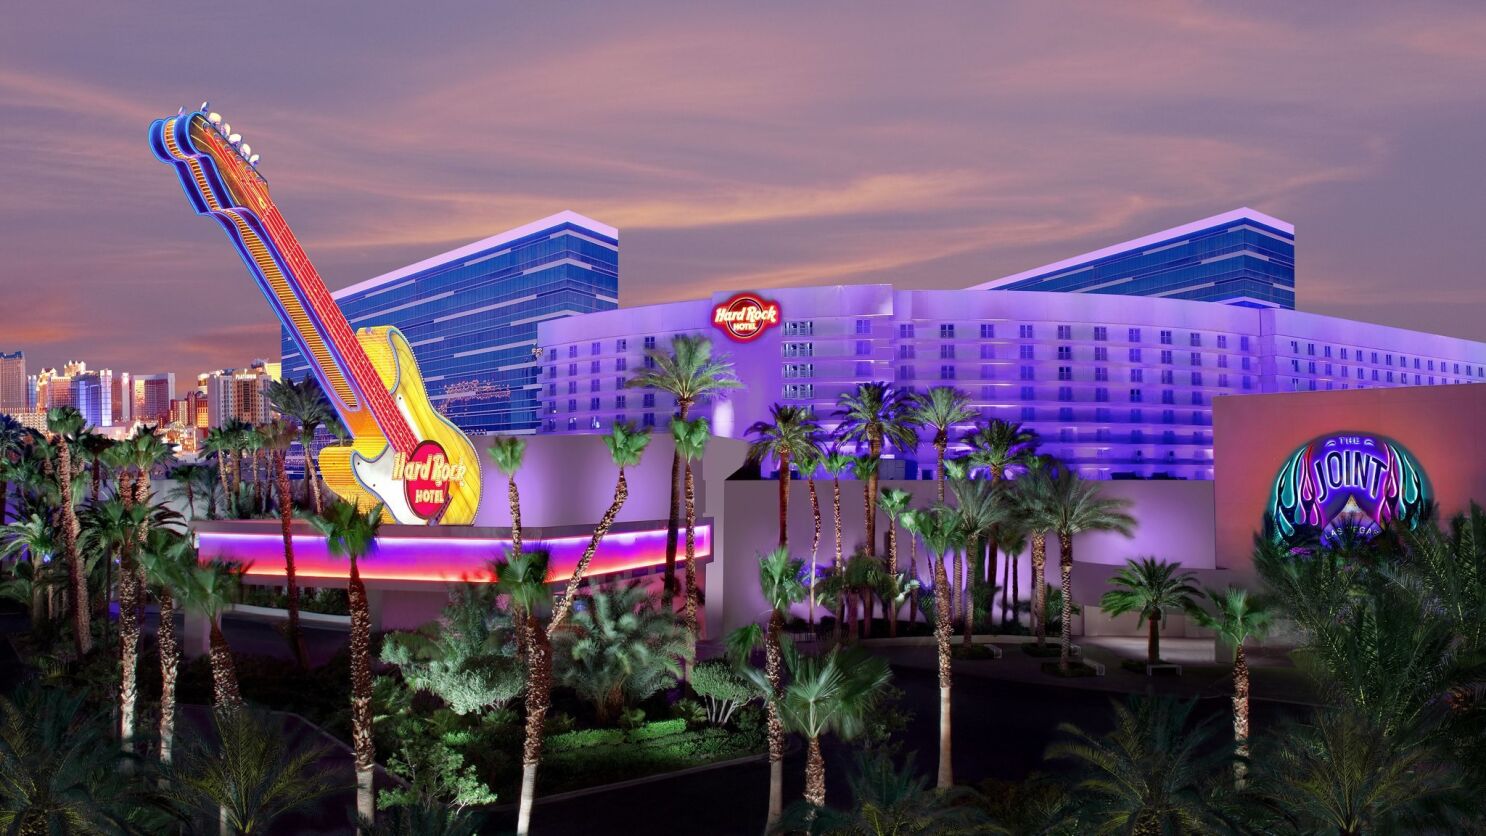 Te mejorarás asesino prima Bye, Hard Rock Hotel. Hello, Virgin. Las Vegas hotel to close during  changeover - Los Angeles Times